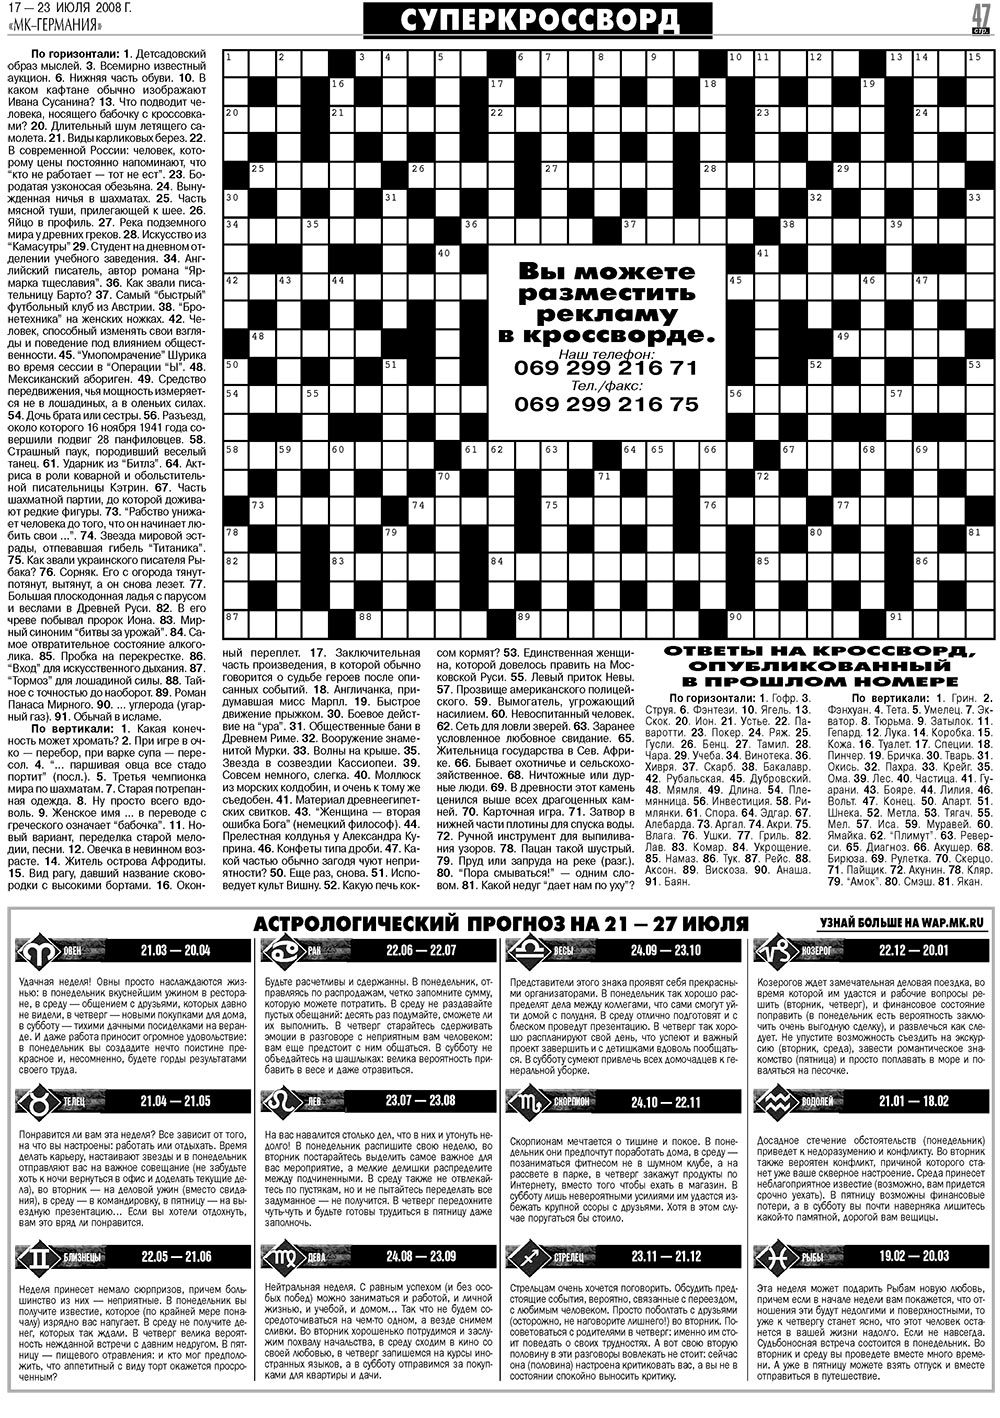 МК-Германия, газета. 2008 №29 стр.47